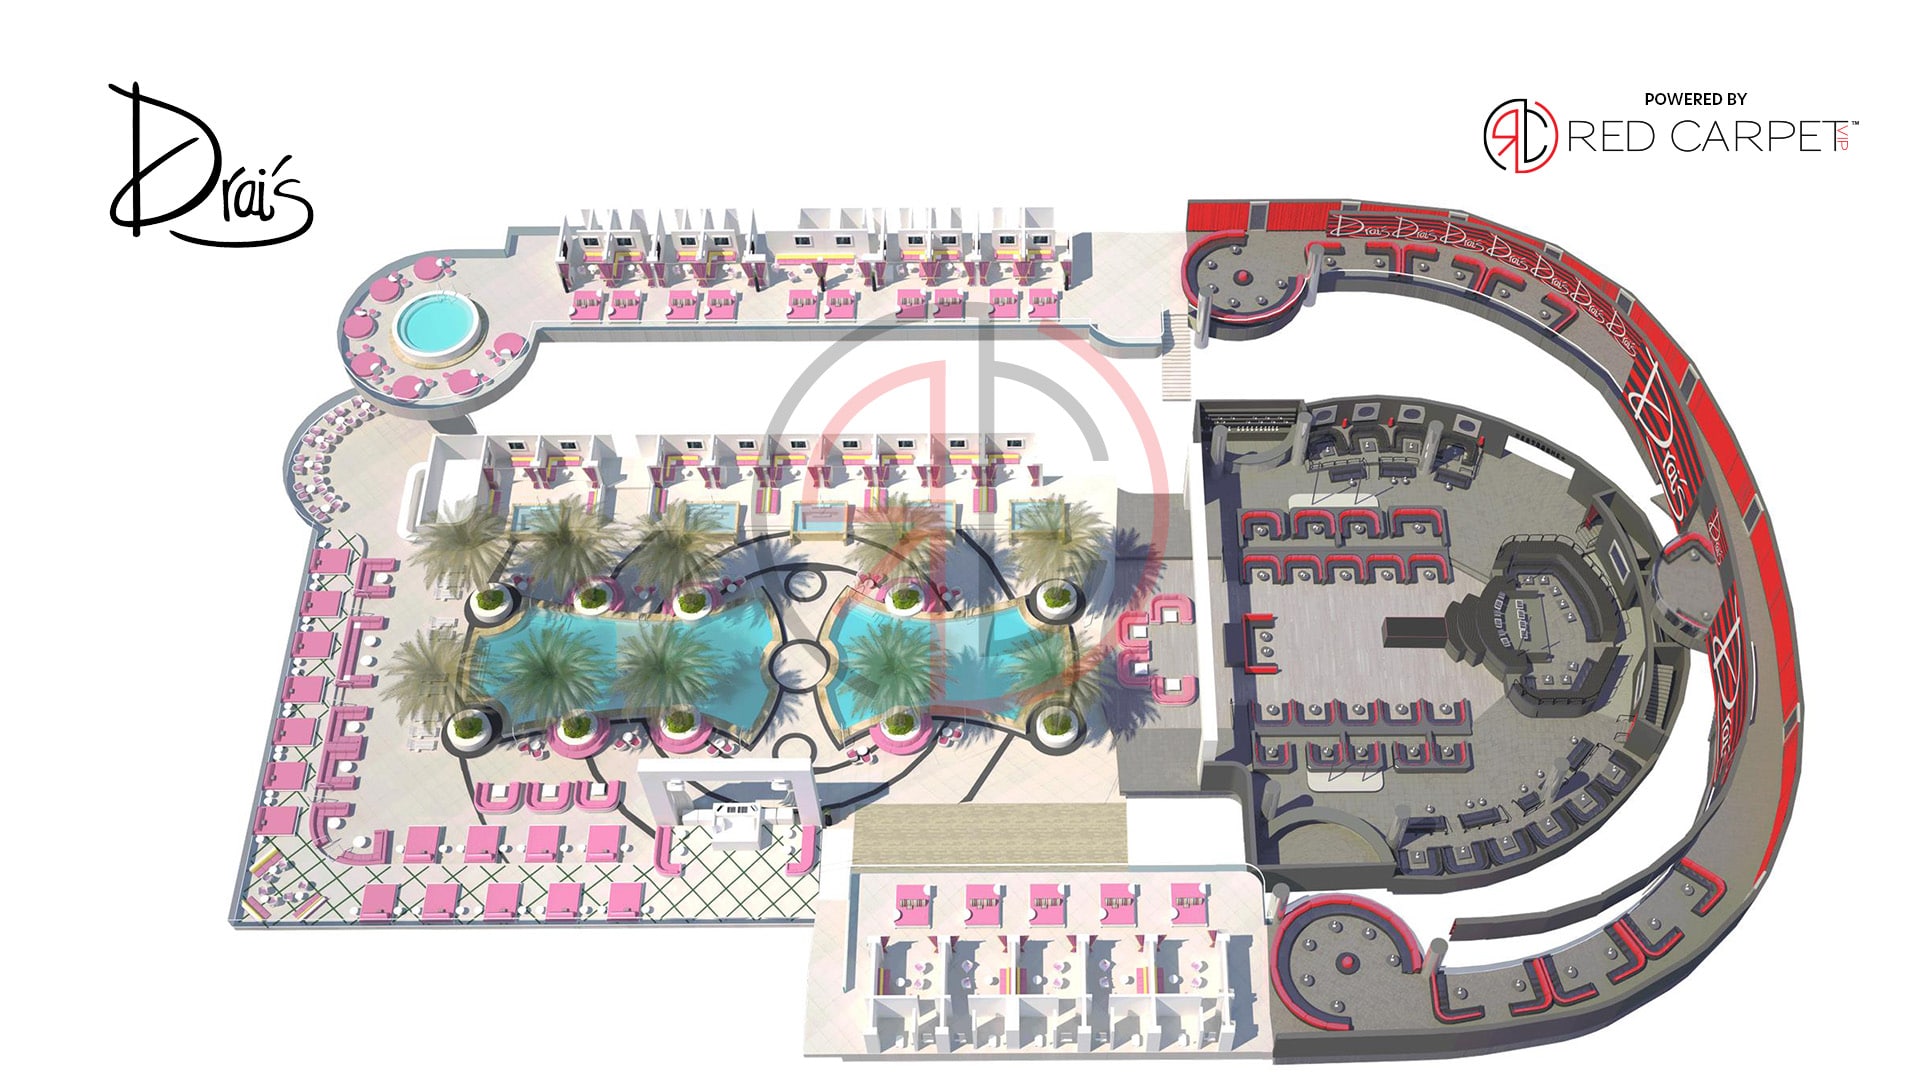 las vegas drais beach club and nightclub venue map